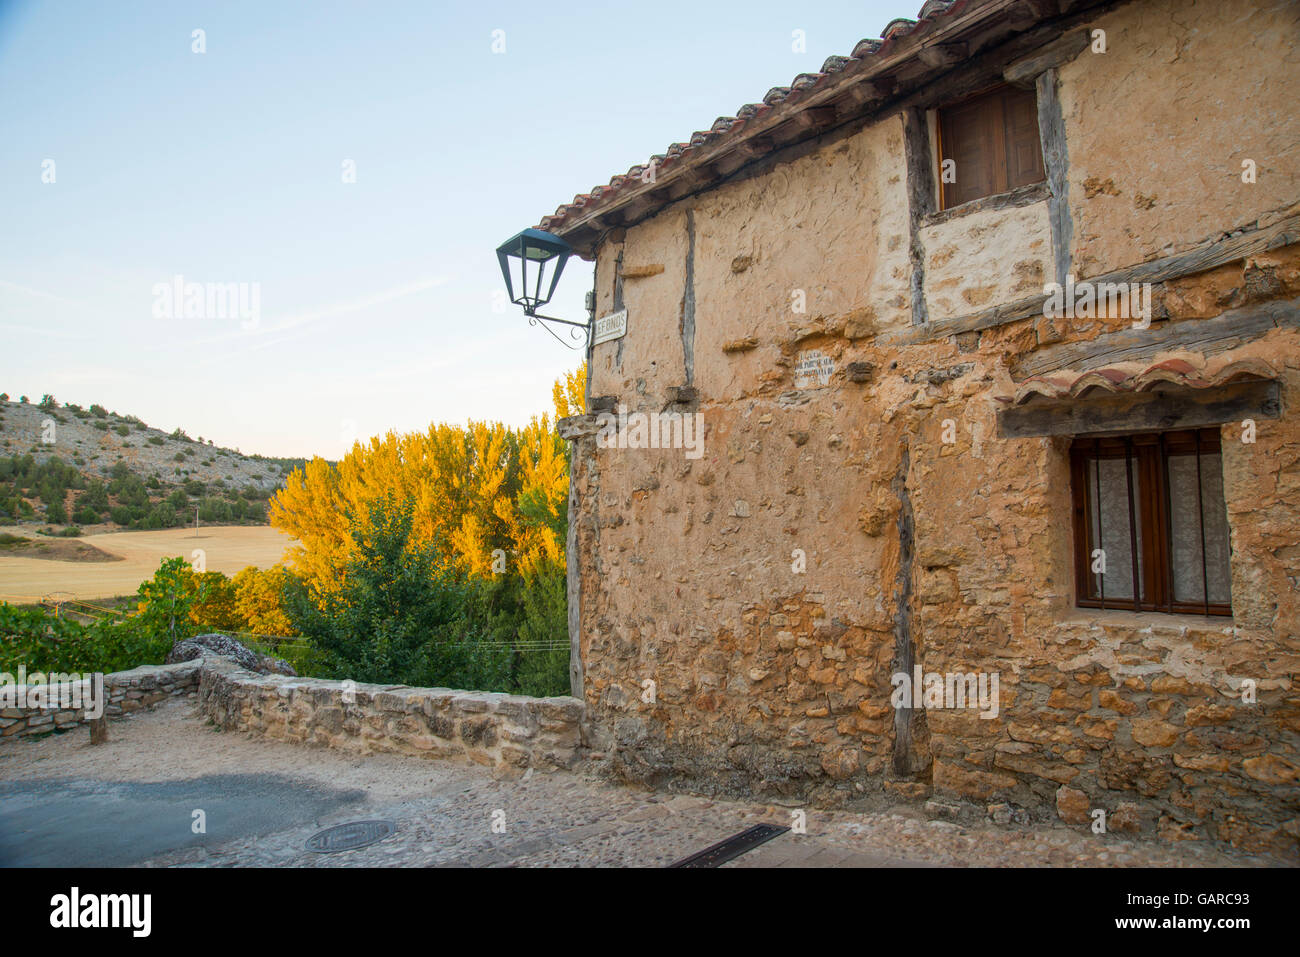 L'architecture traditionnelle. Calatañazor, la province de Soria, Castilla Leon, Espagne. Banque D'Images